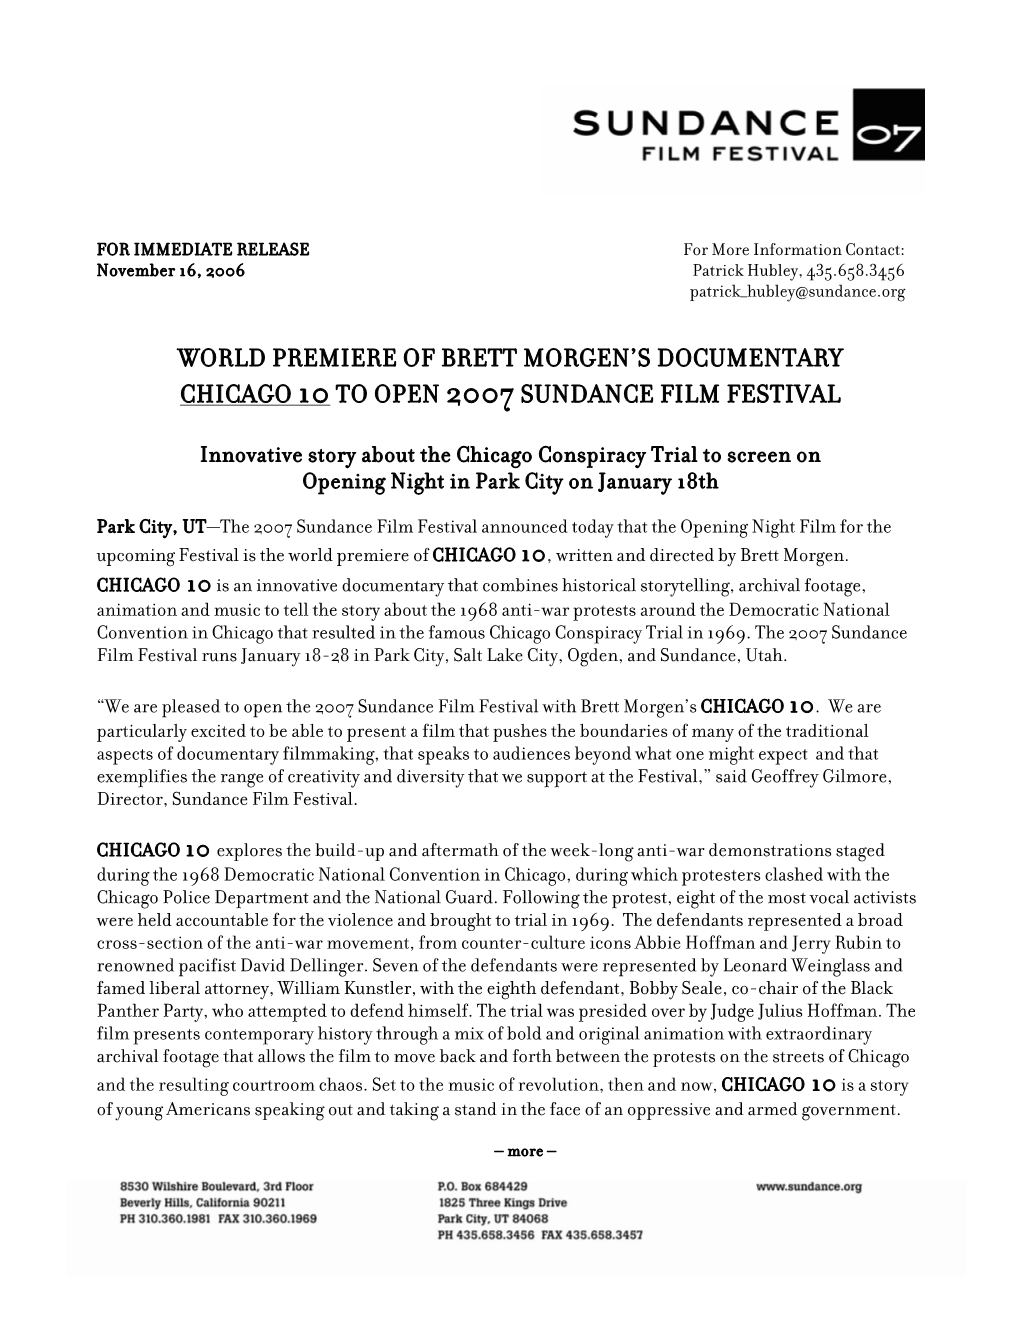 World Premiere of Brett Morgen's Documentary Chicago 10 to Open